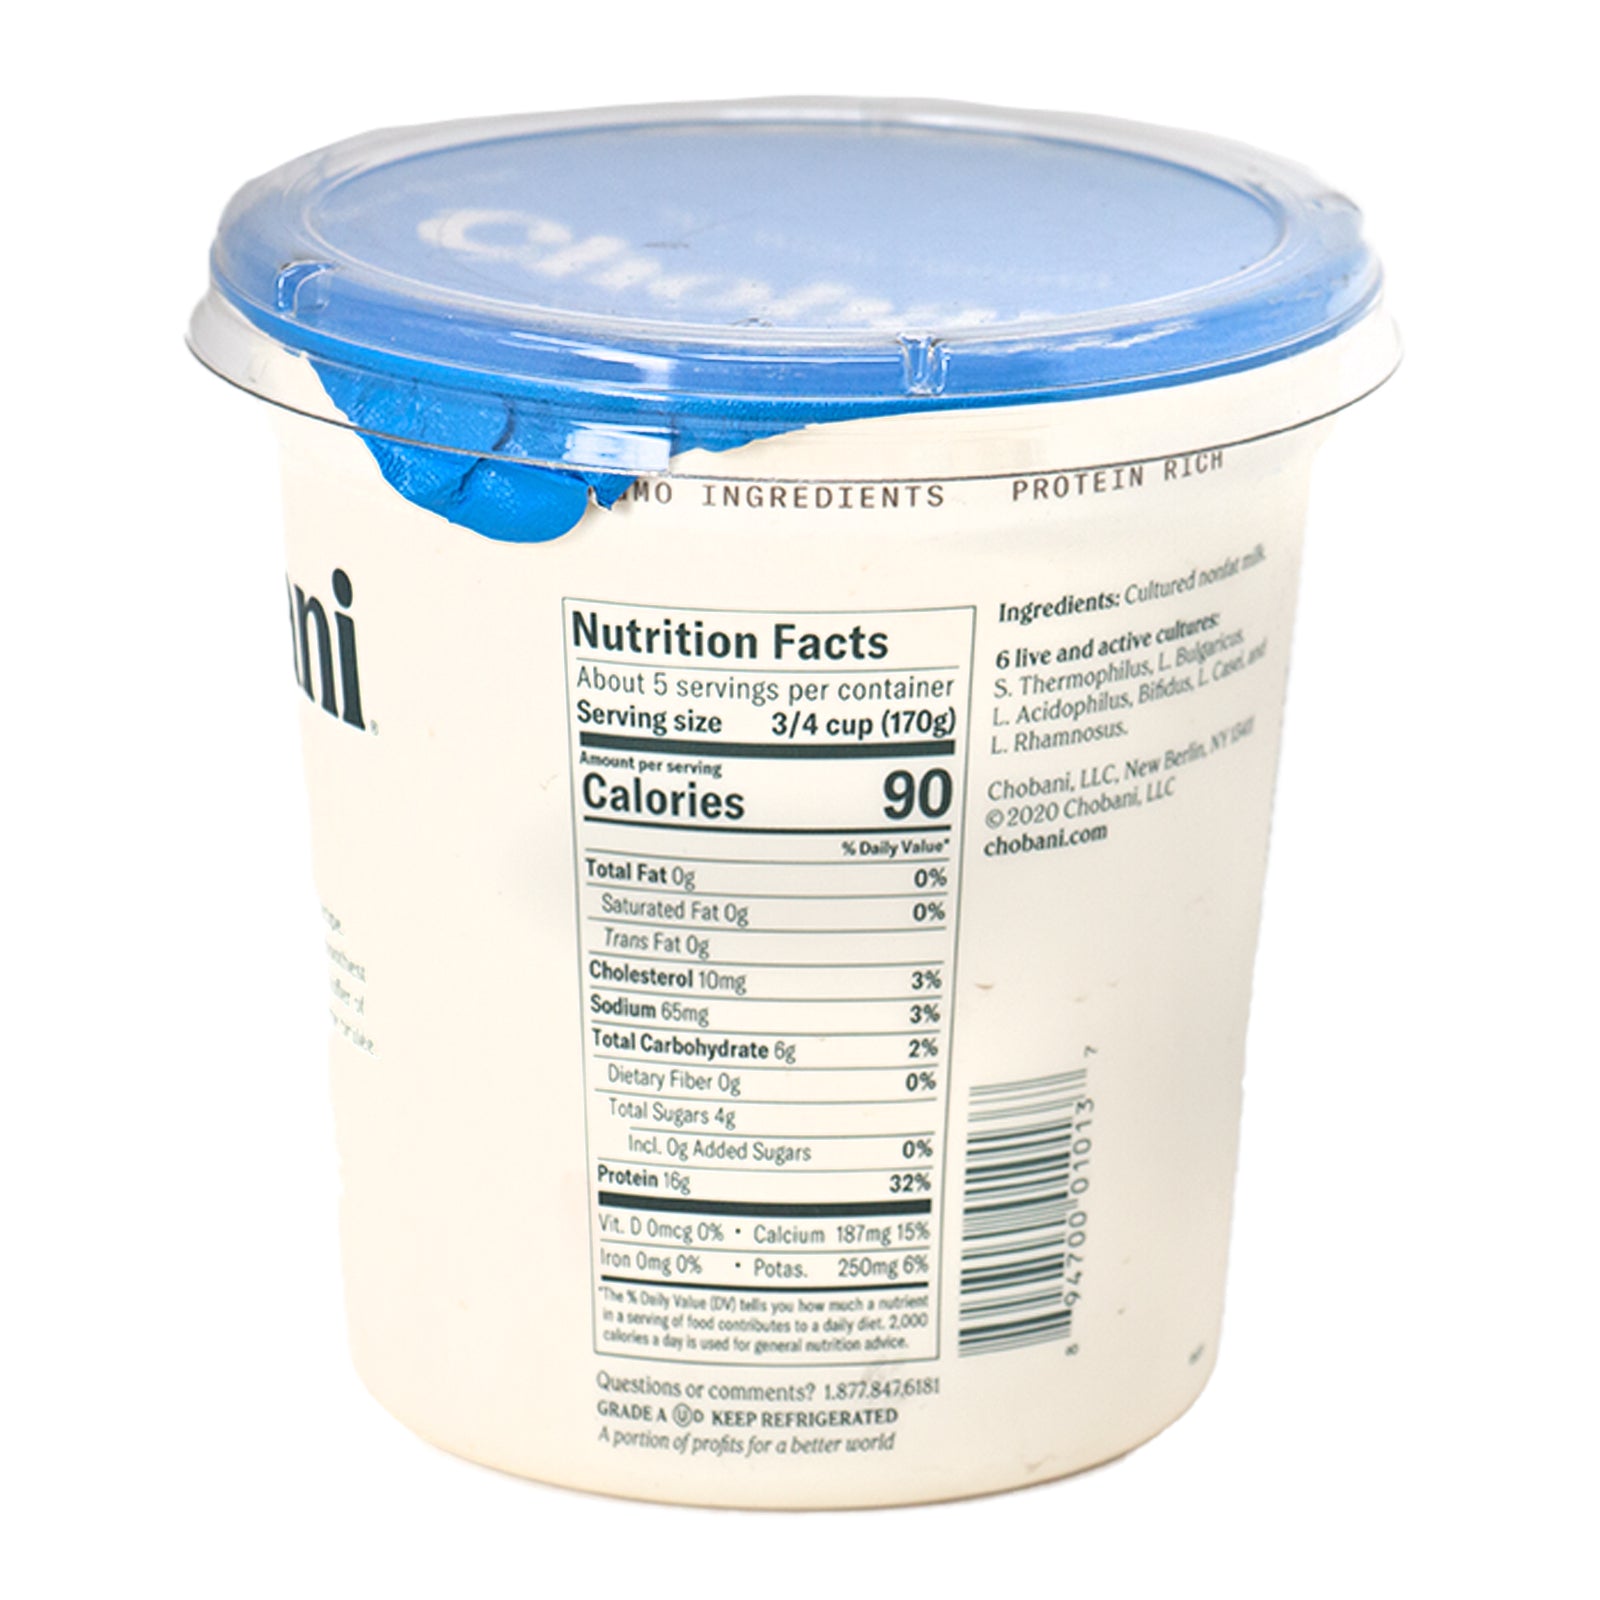 Chobani Yogurt Greek Strawberry Gluten Free 5.3 oz – California